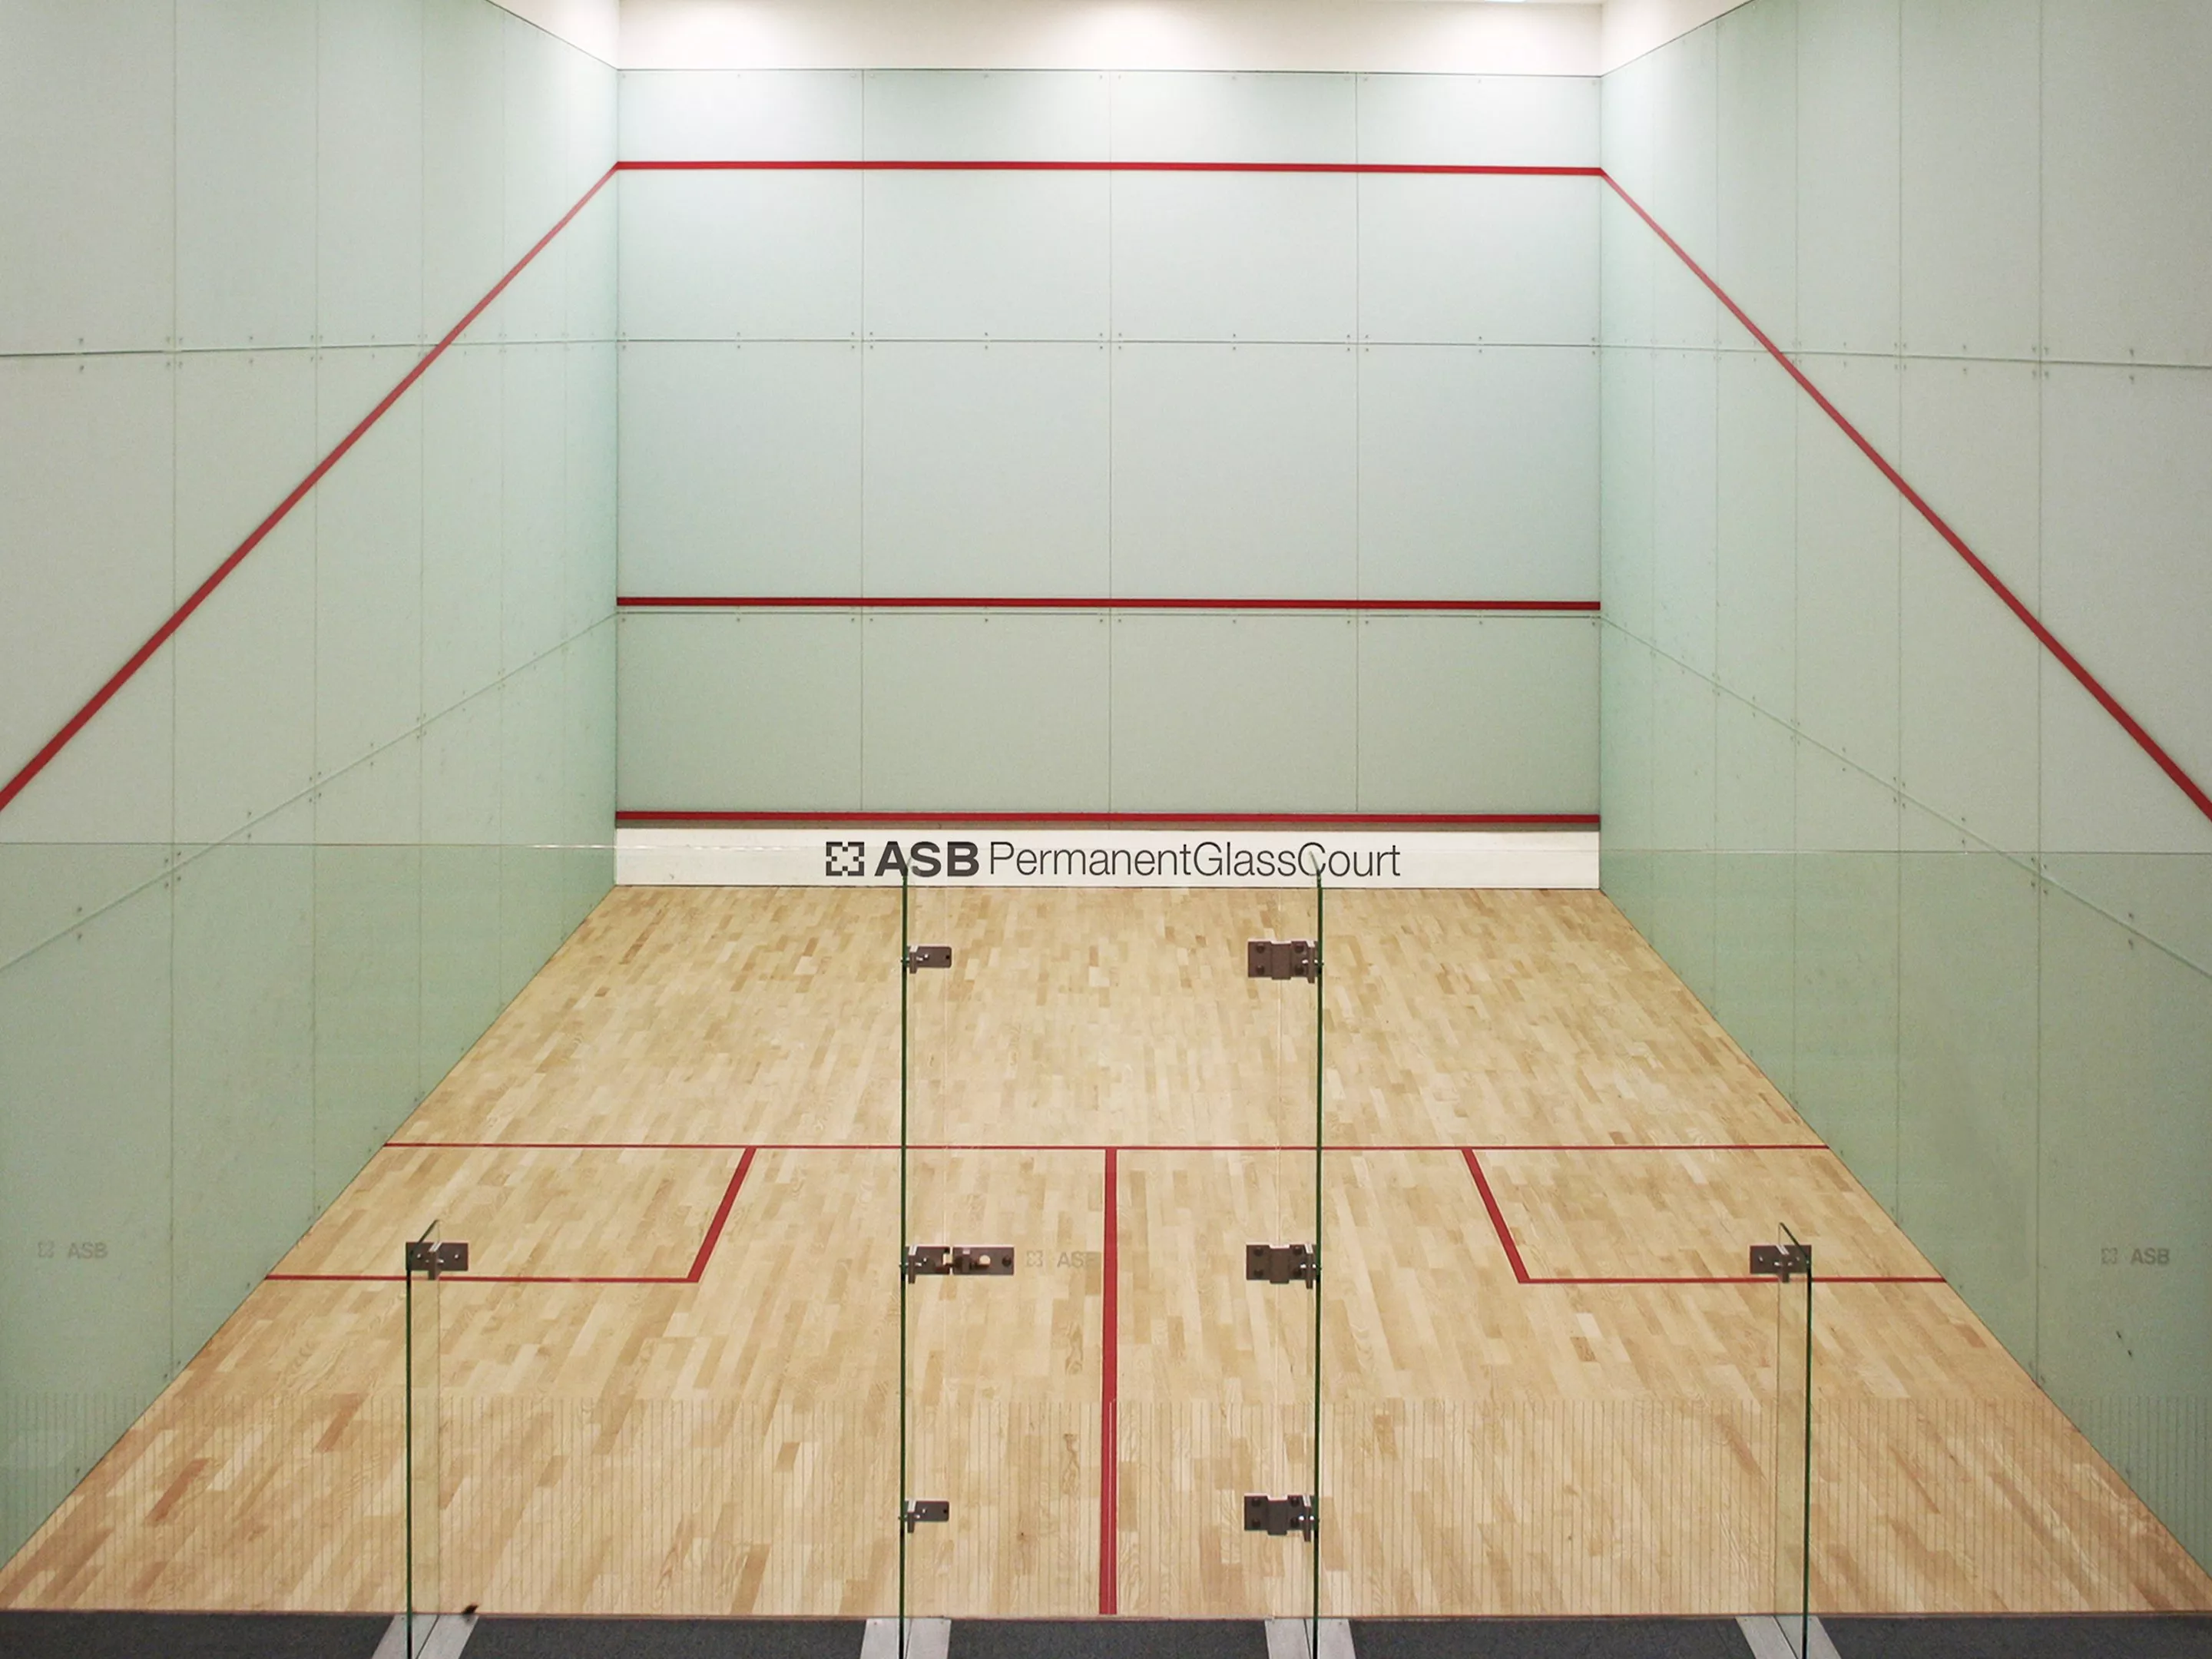 Squash Arena in Czech Republic, Europe | Squash - Rated 7.5